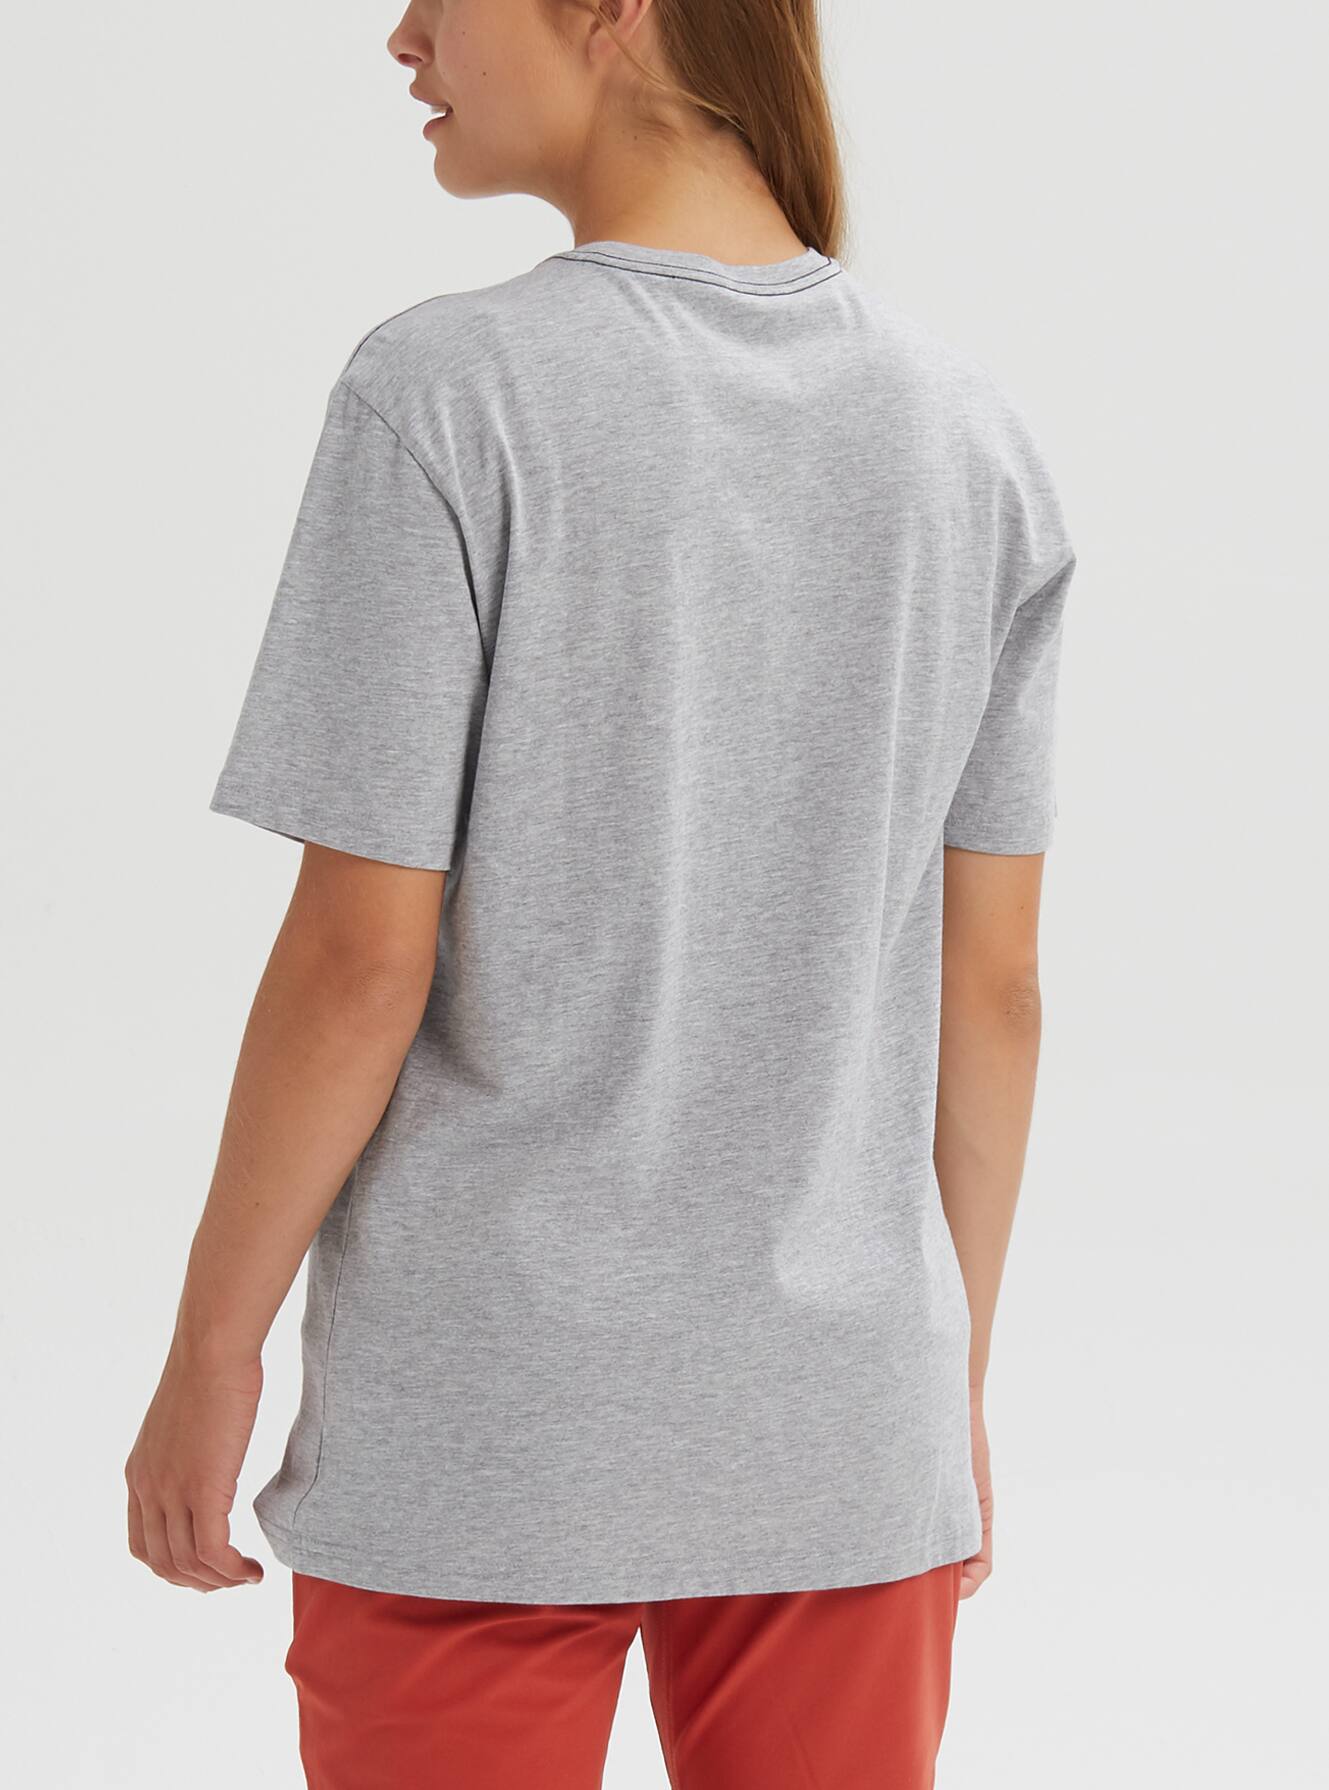 Underhill Short Sleeve T-Shirt